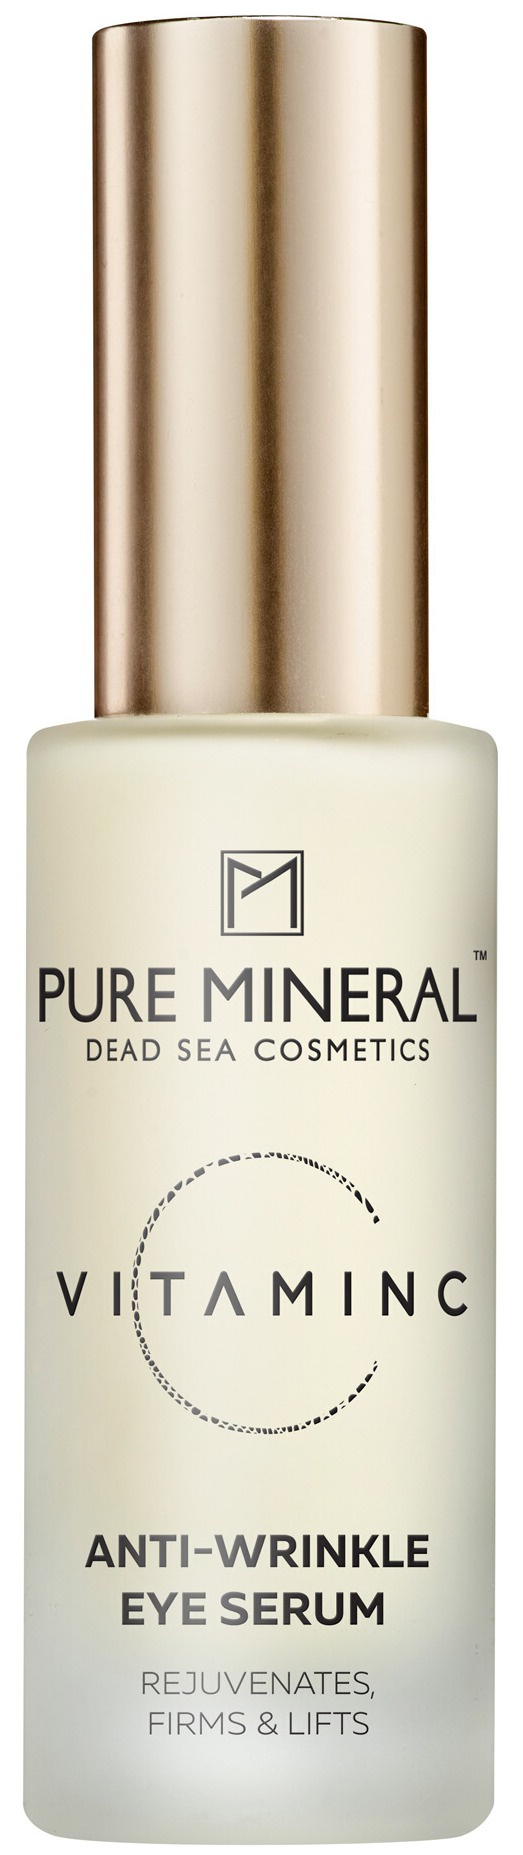 Pure Mineral Dead Sea Cosmetics Vitamin C Anti Wrinkle Eye Serum